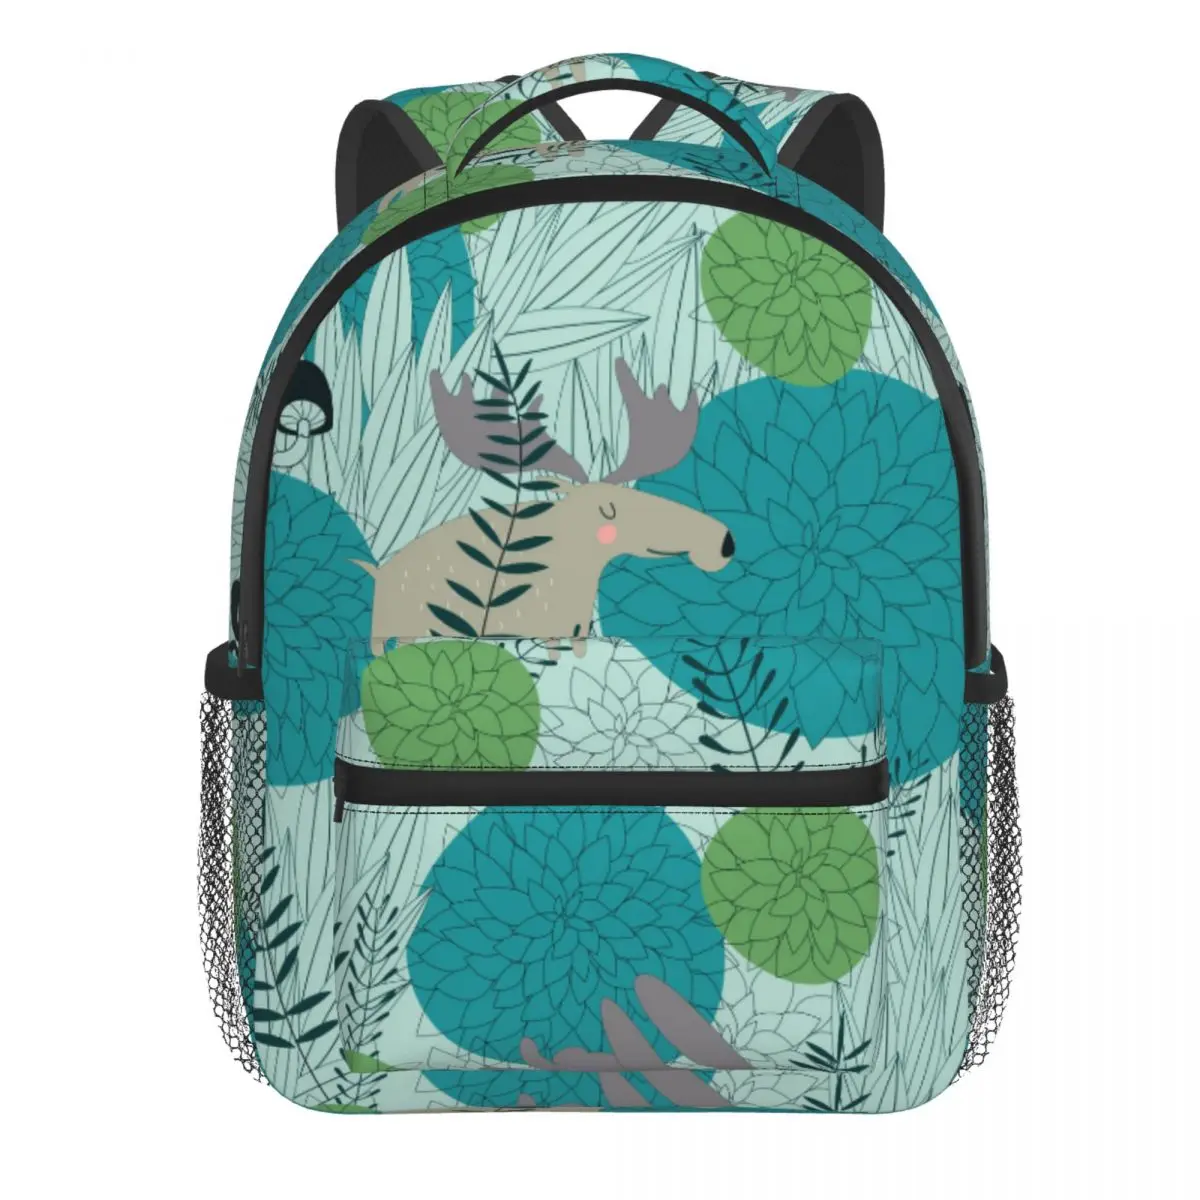 Cute Antelope And Cat In Forest Kids Backpack Toddler School Bag Kindergarten Mochila for Boys Girls 2-5 Years